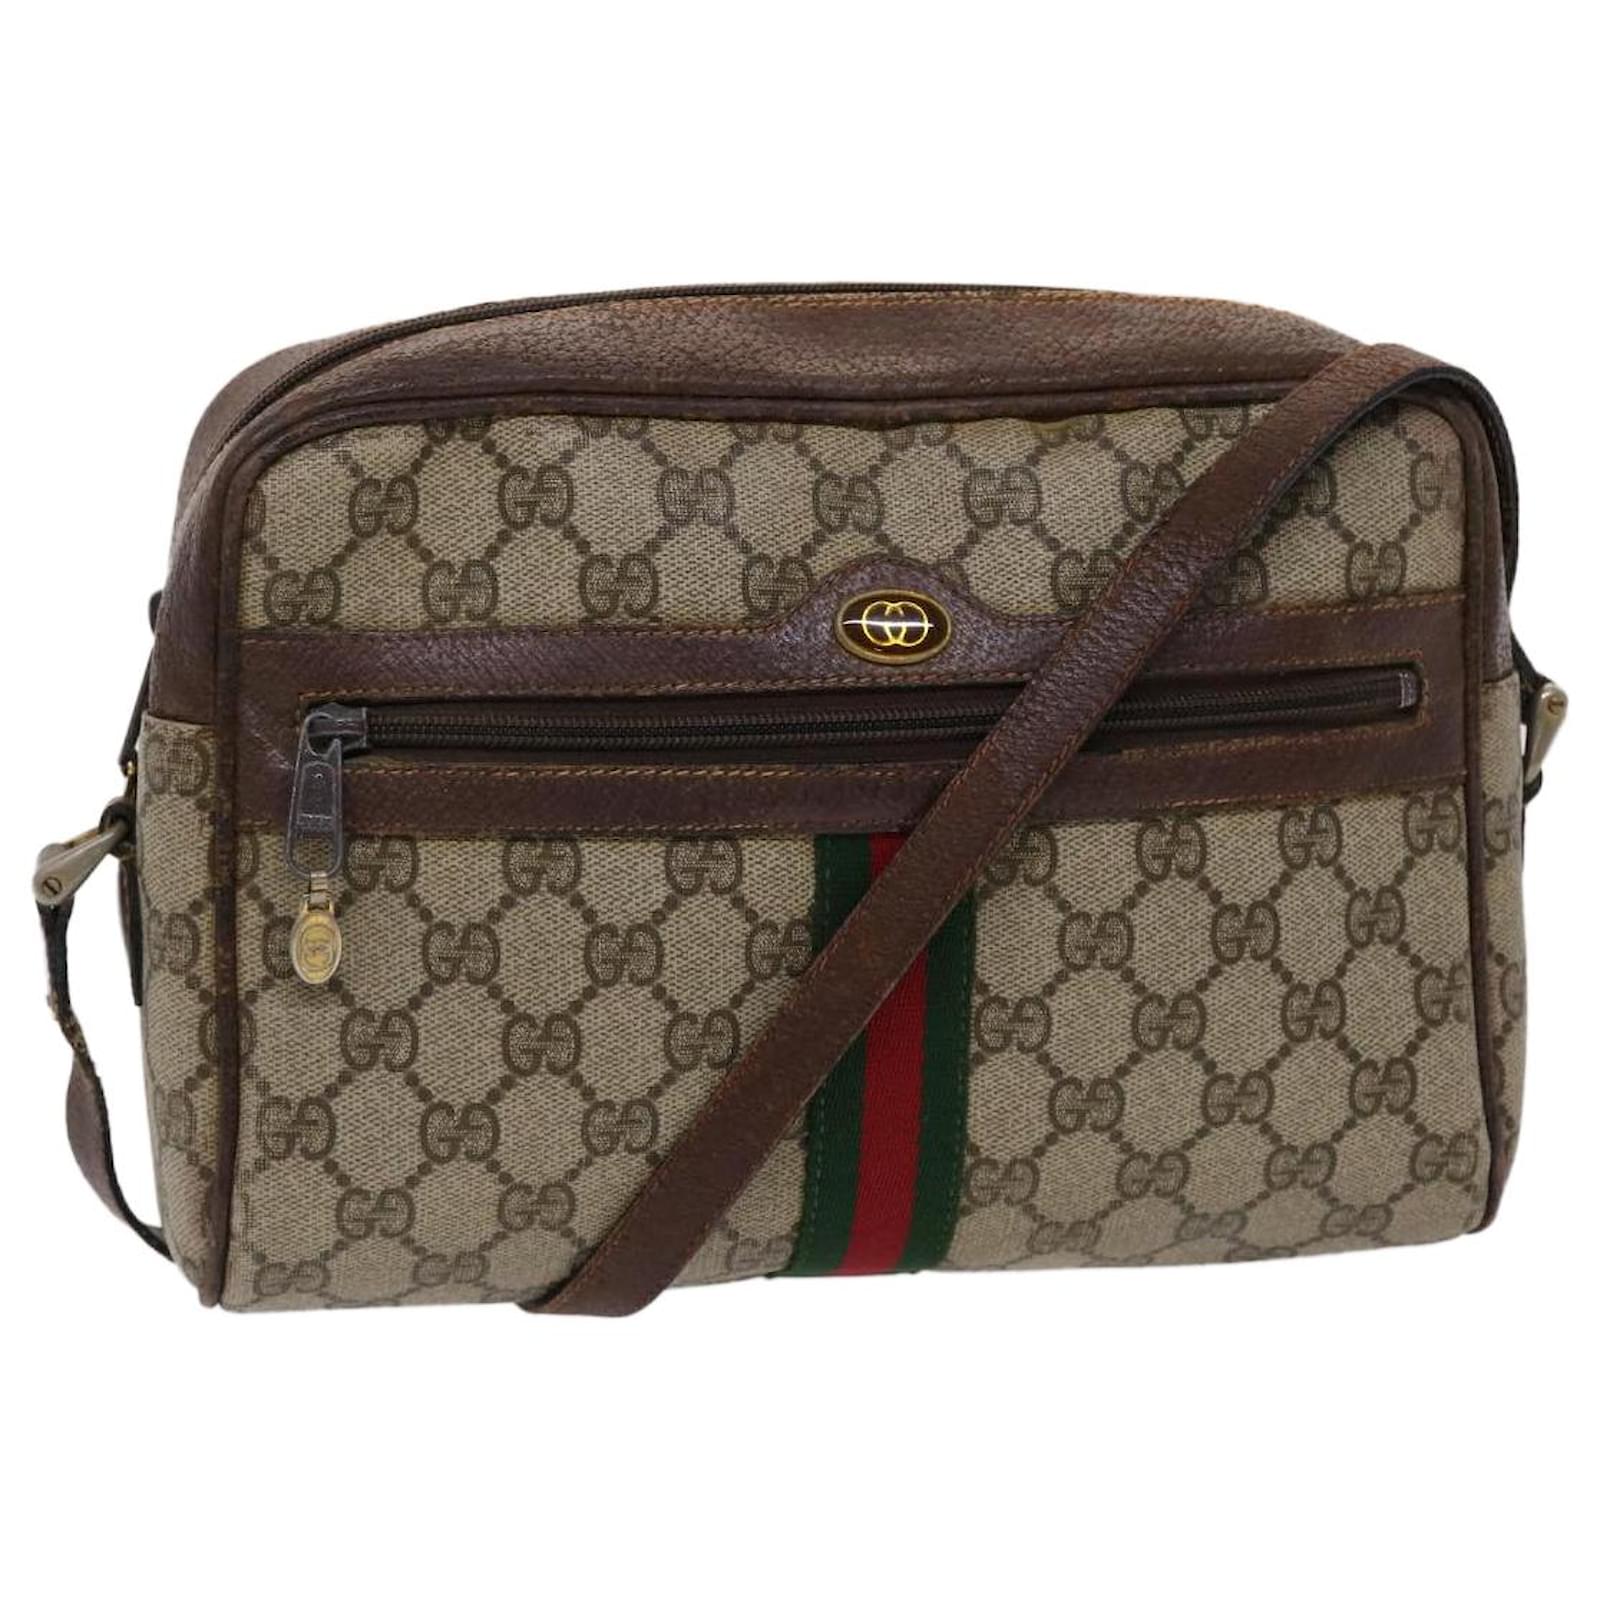 Gucci GG Supreme Messenger Bag, Drops